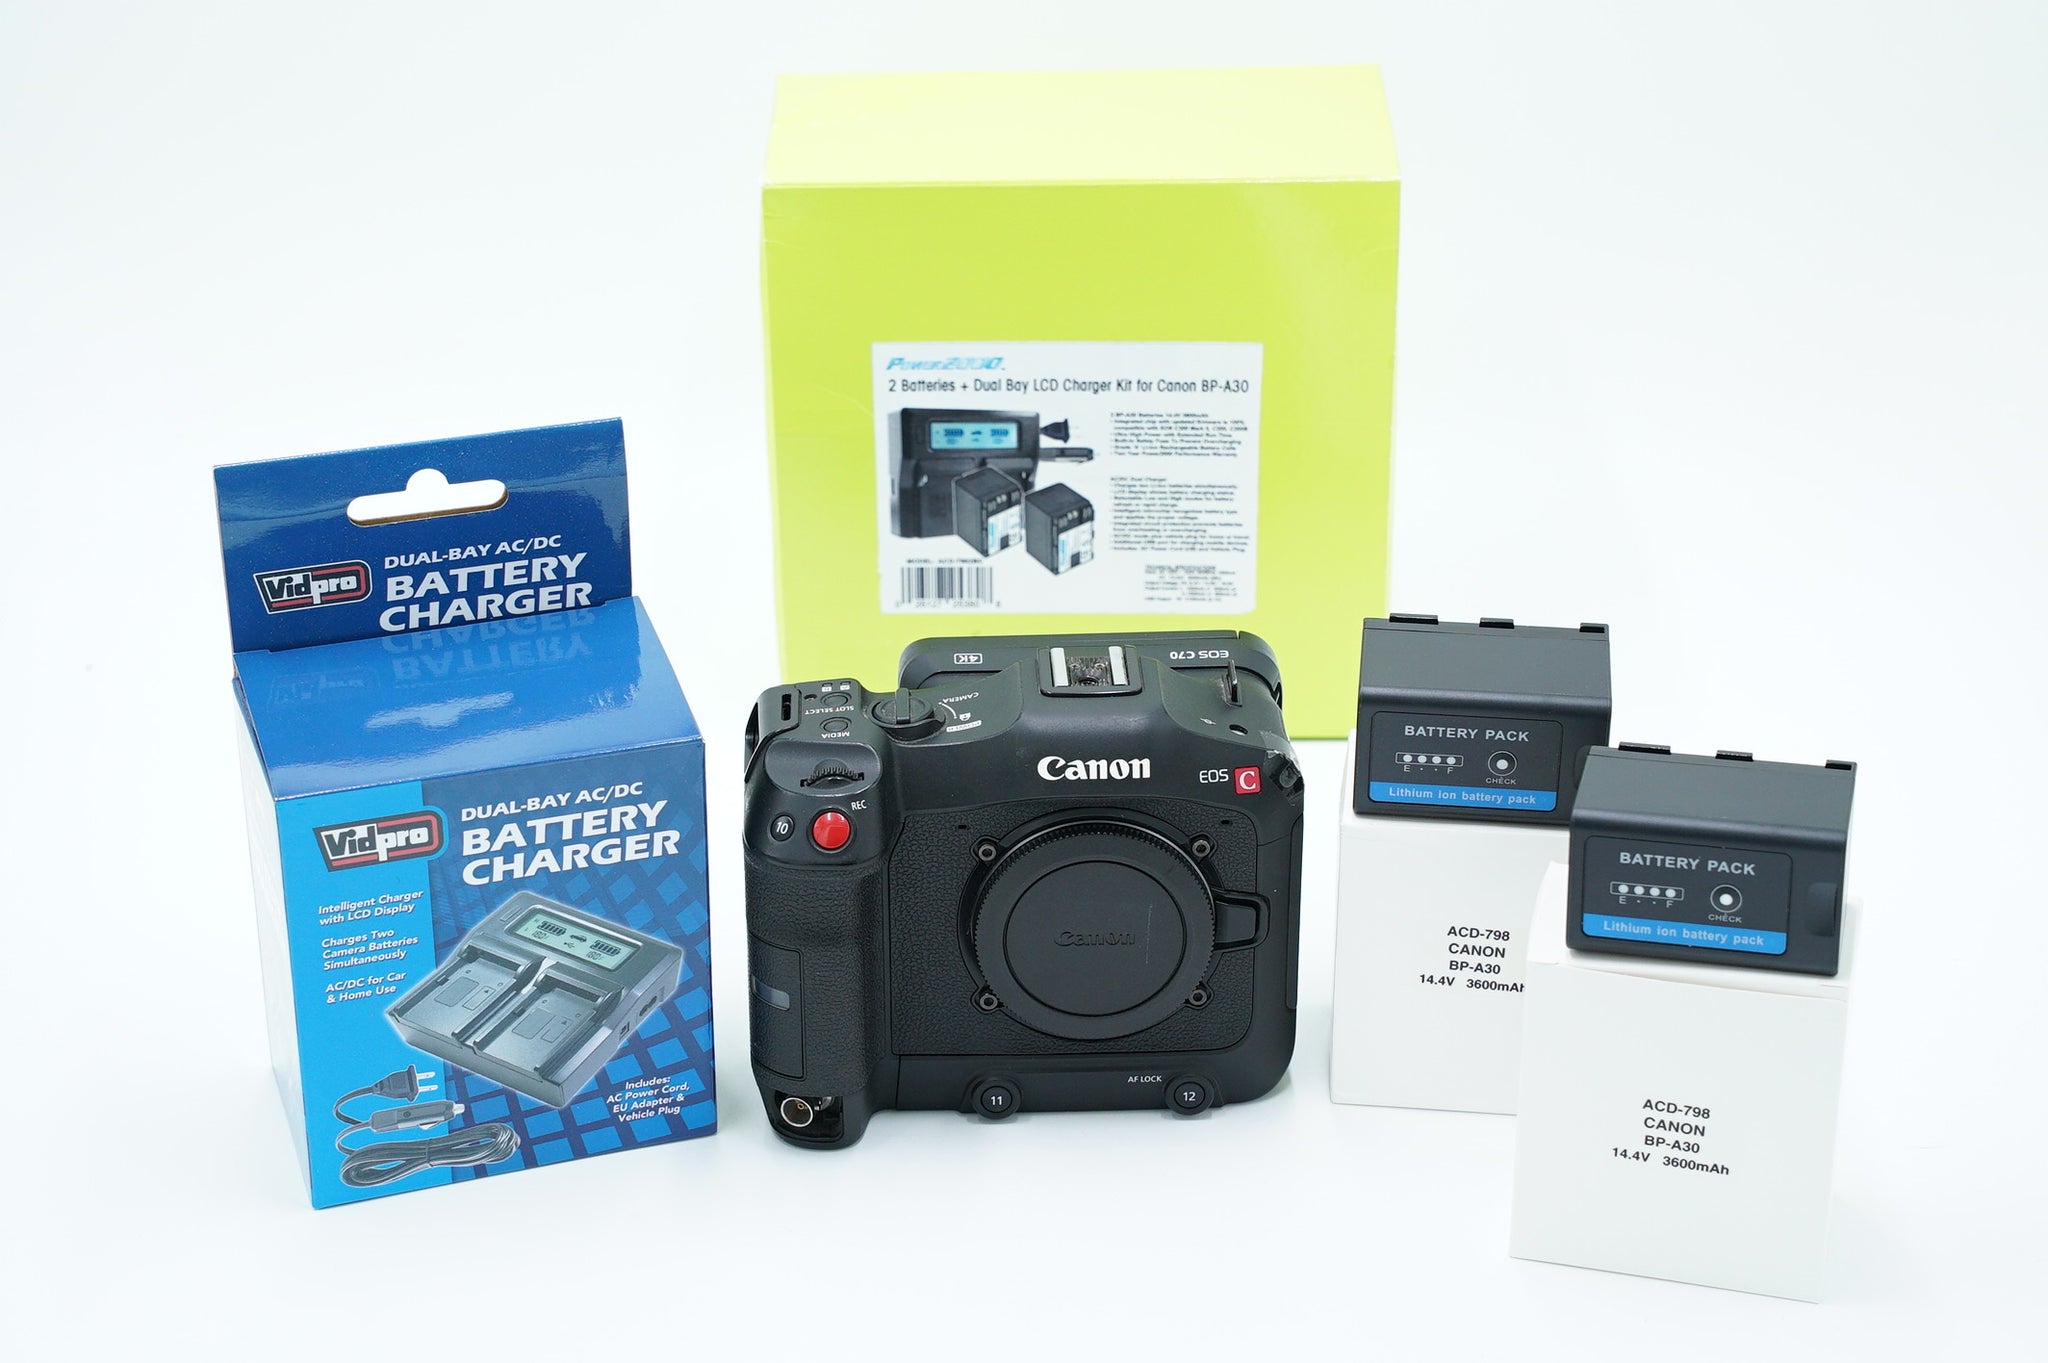 Canon EOSC70/00222 EOS C70 Cinema Camera (RF Lens Mount), Used